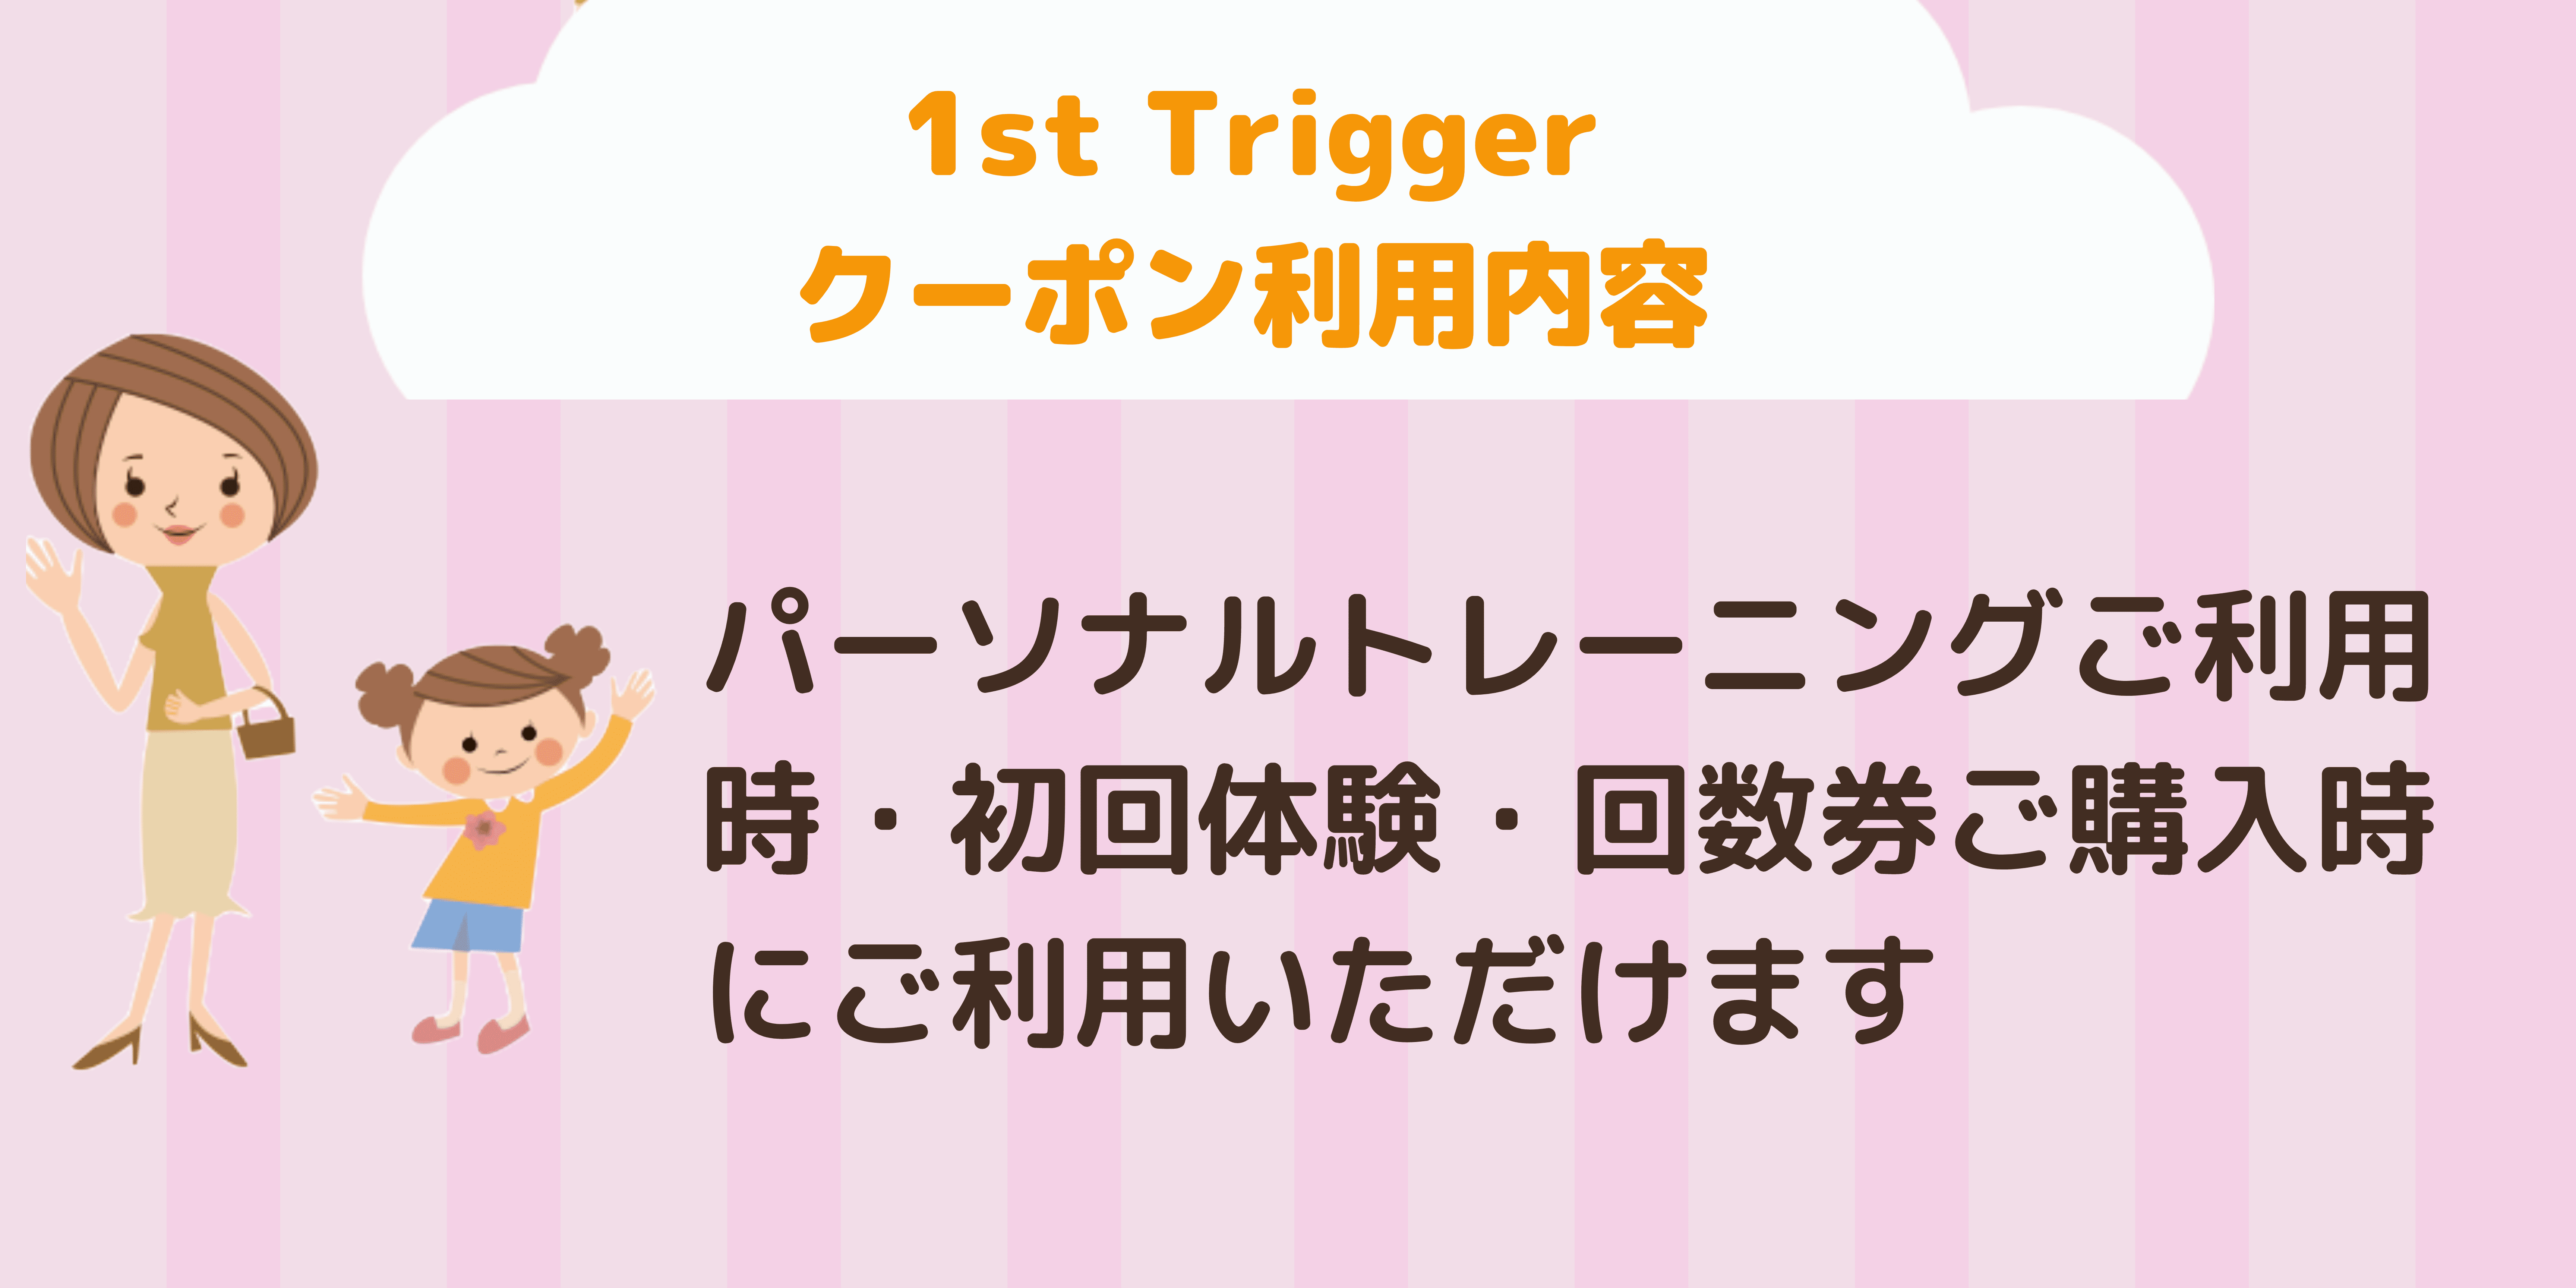 1st Trigger